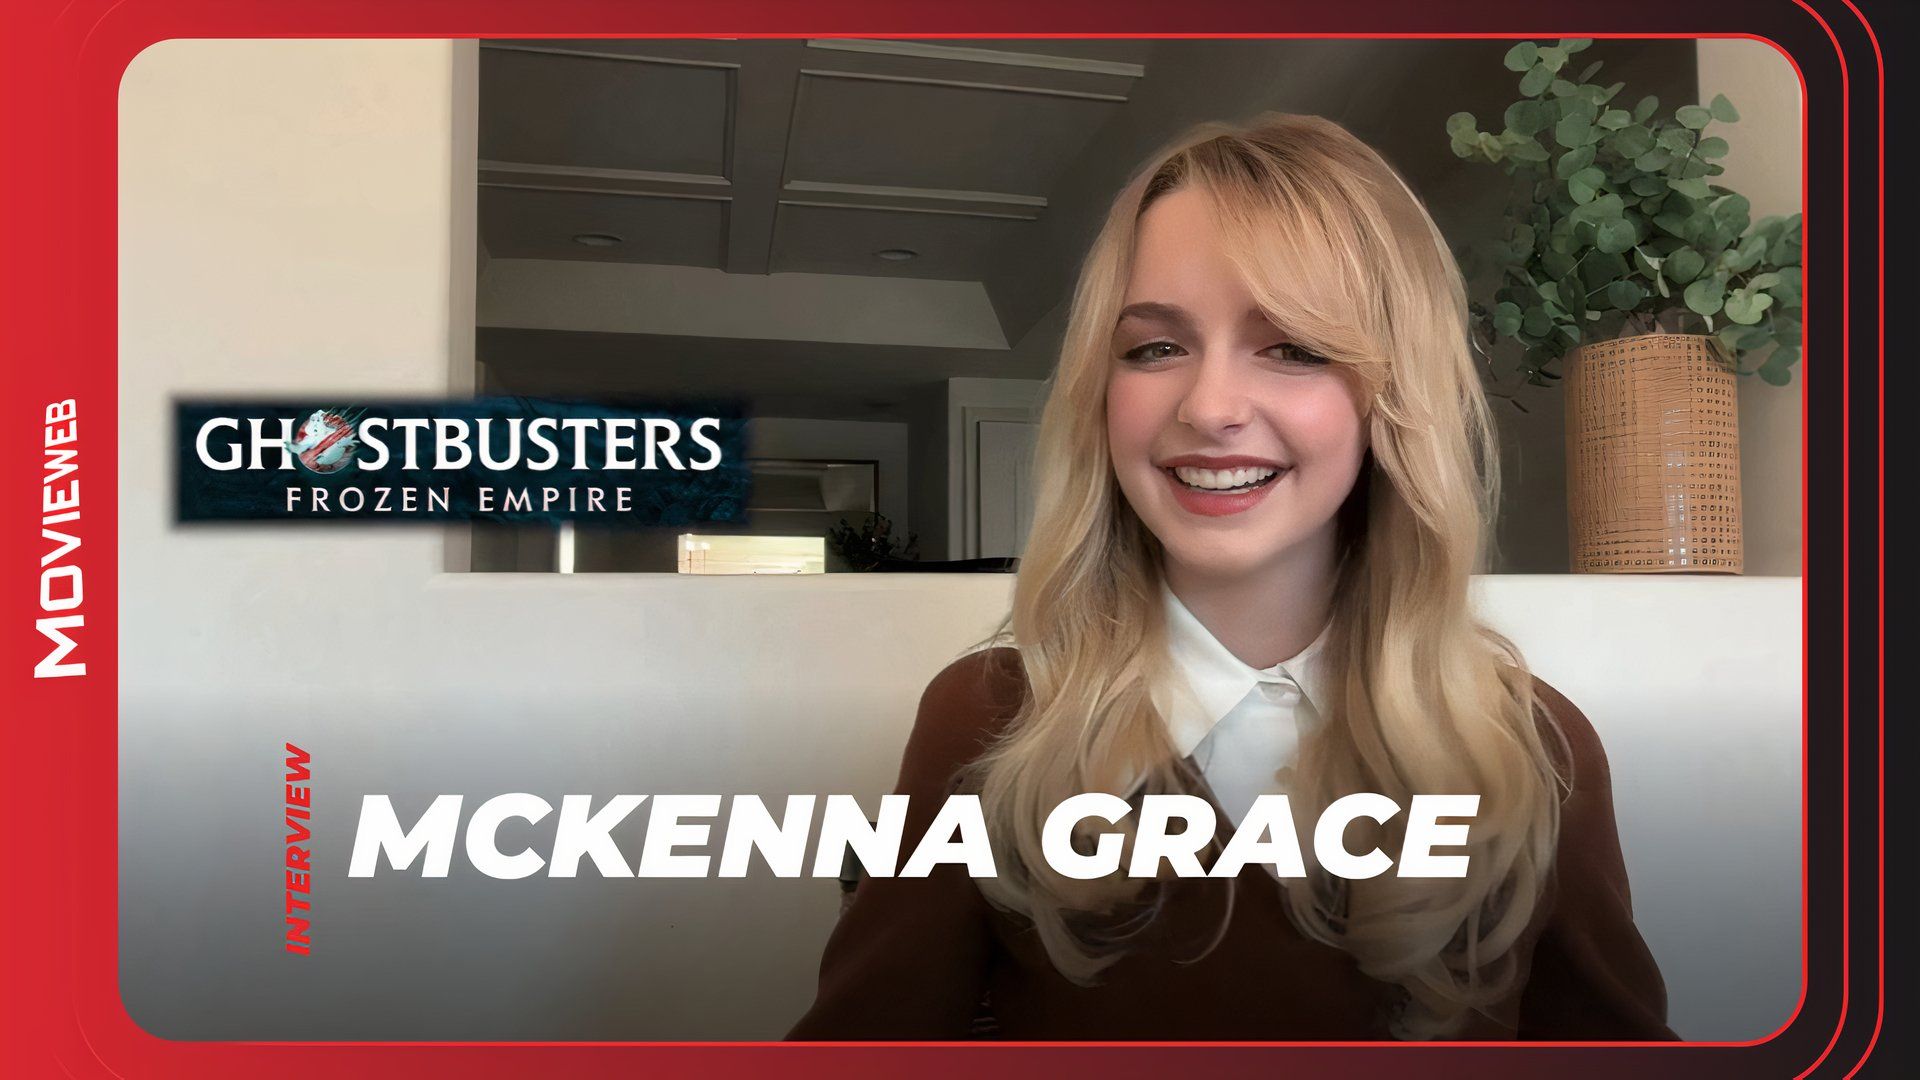 Ghostbusters- Frozen Empire - Mckenna Grace